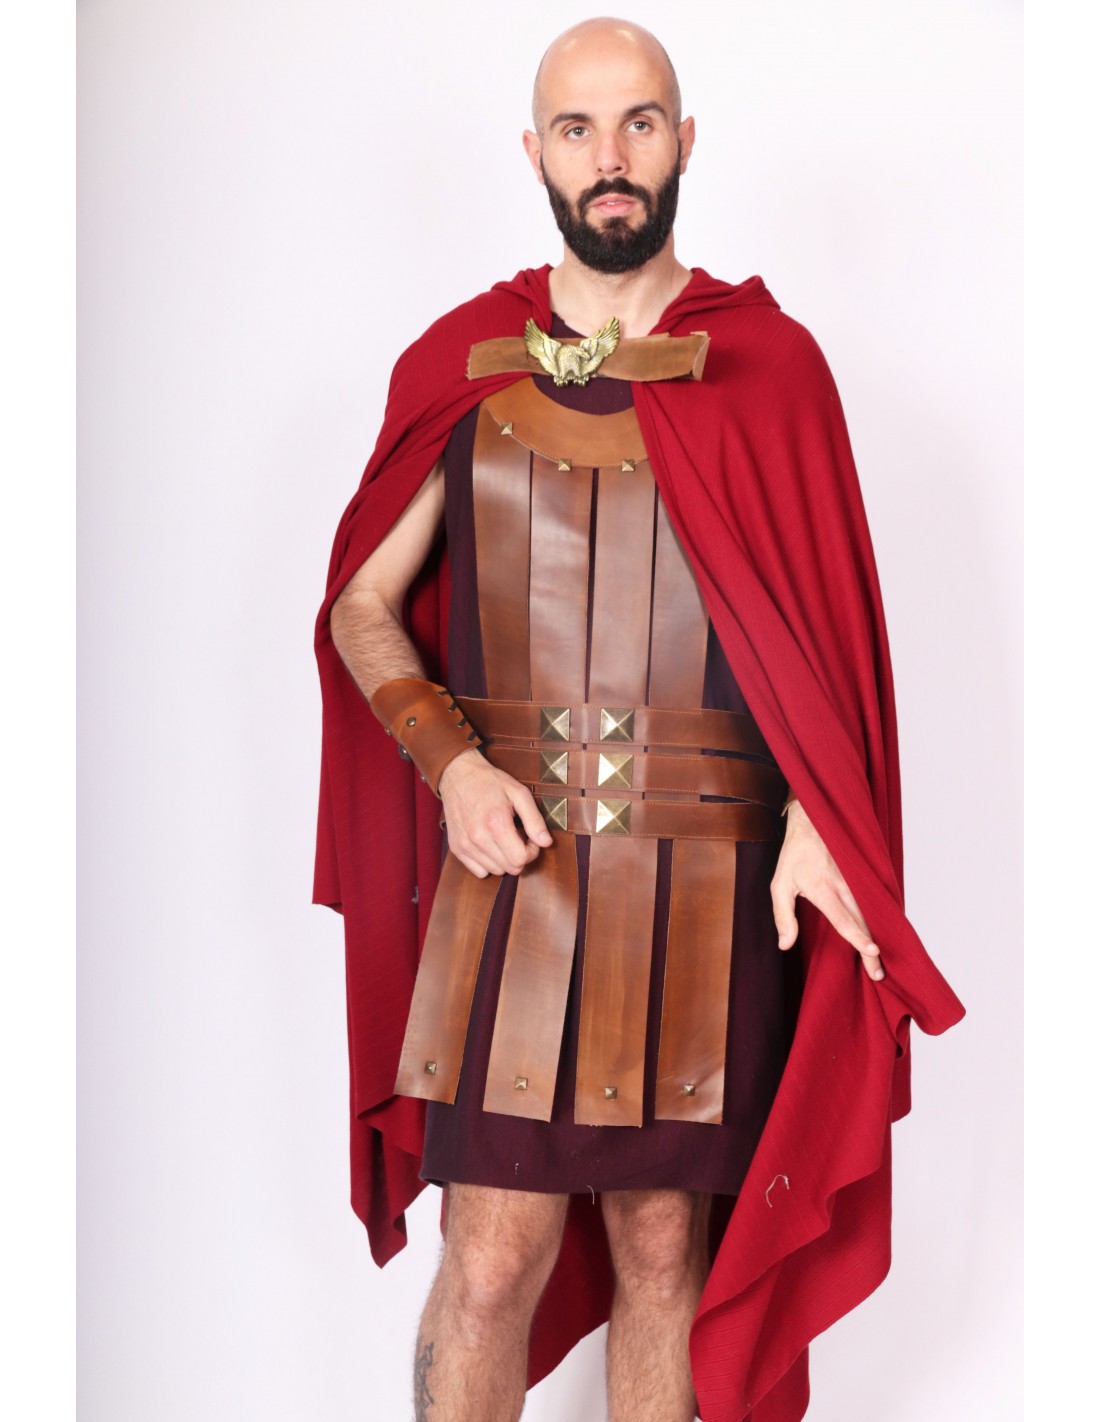 Red Roman cloak or Roman paendula